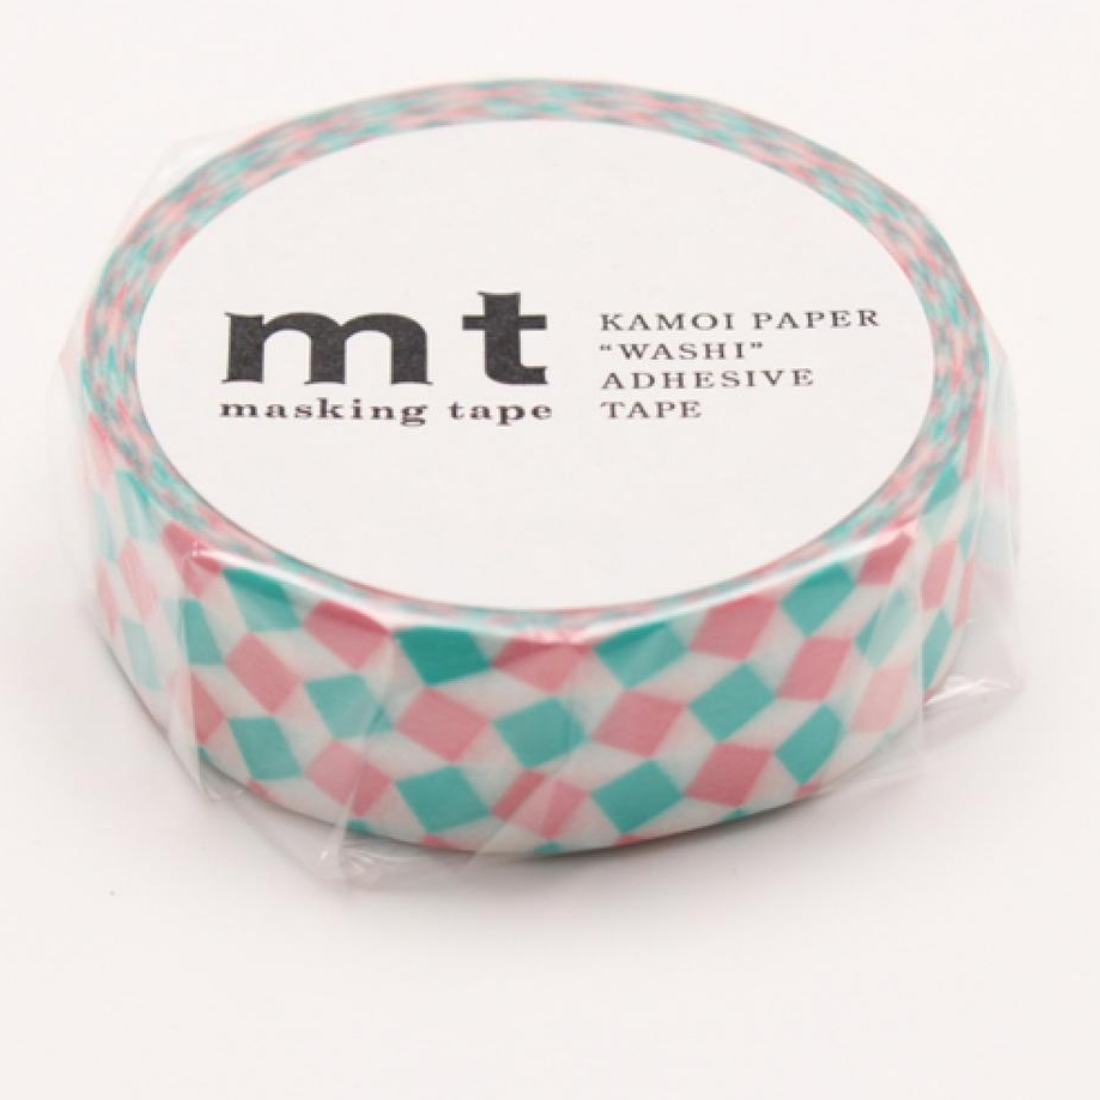 Washi Tape Square Pink MT01D179Z mt masking tape